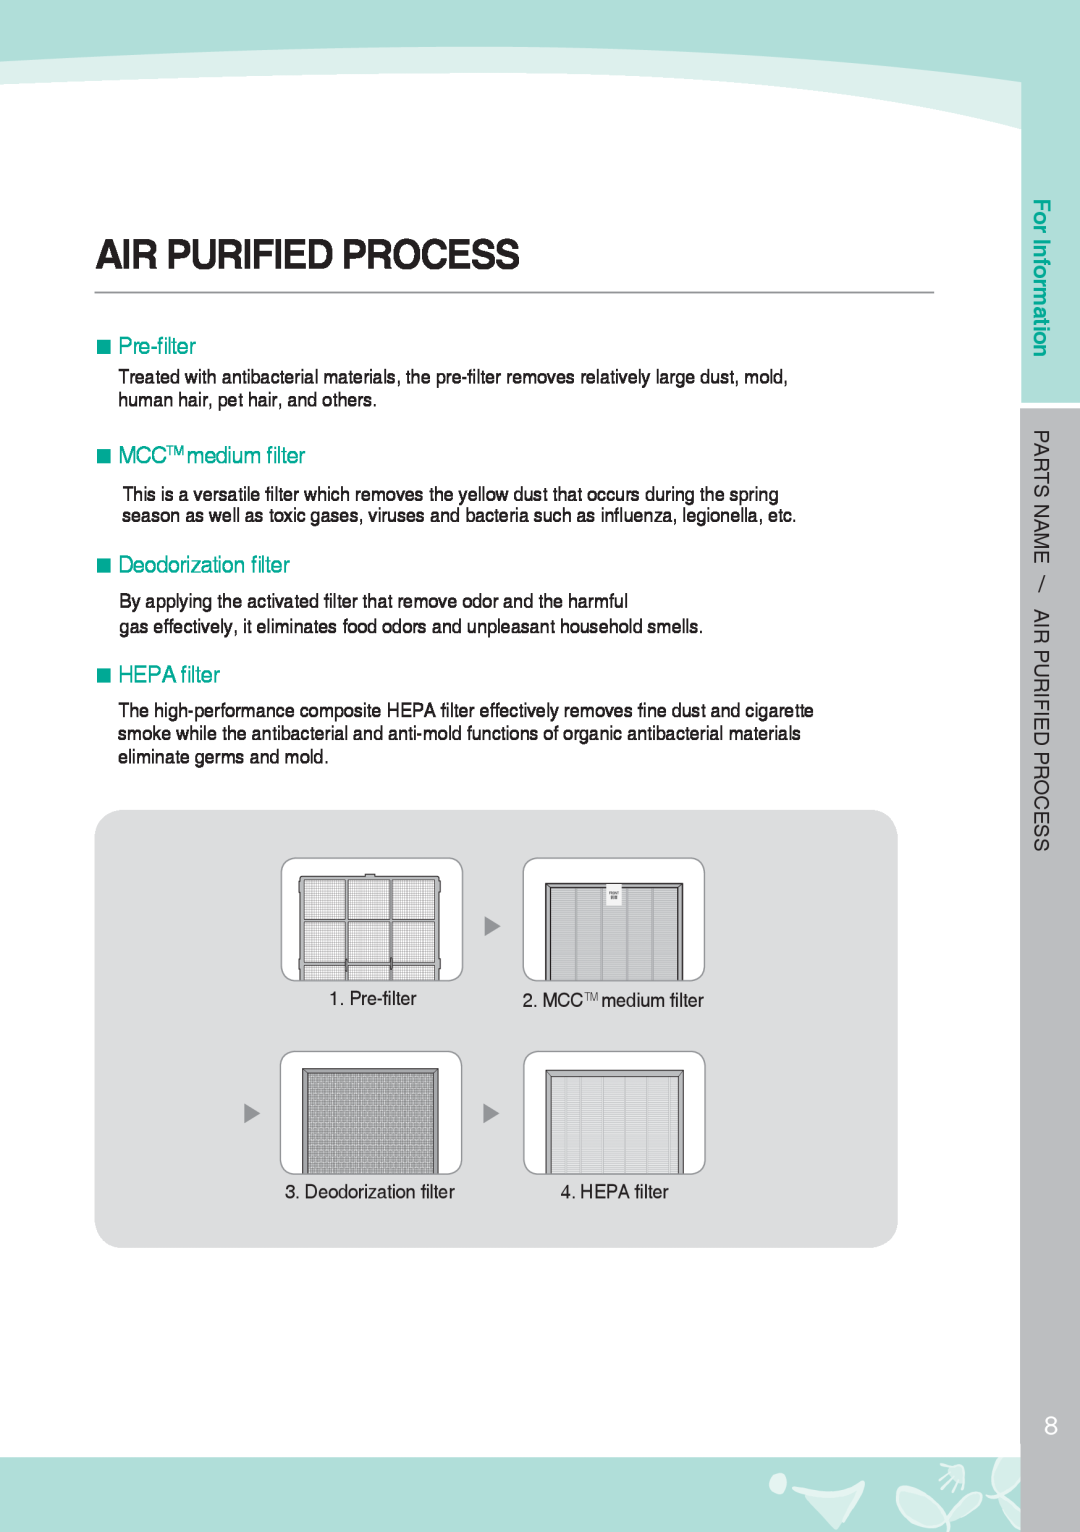 Coway AP-1008DH Air Purified Process, Pre-filter, MCCTM medium filter, Deodorization filter, HEPA filter, For Information 